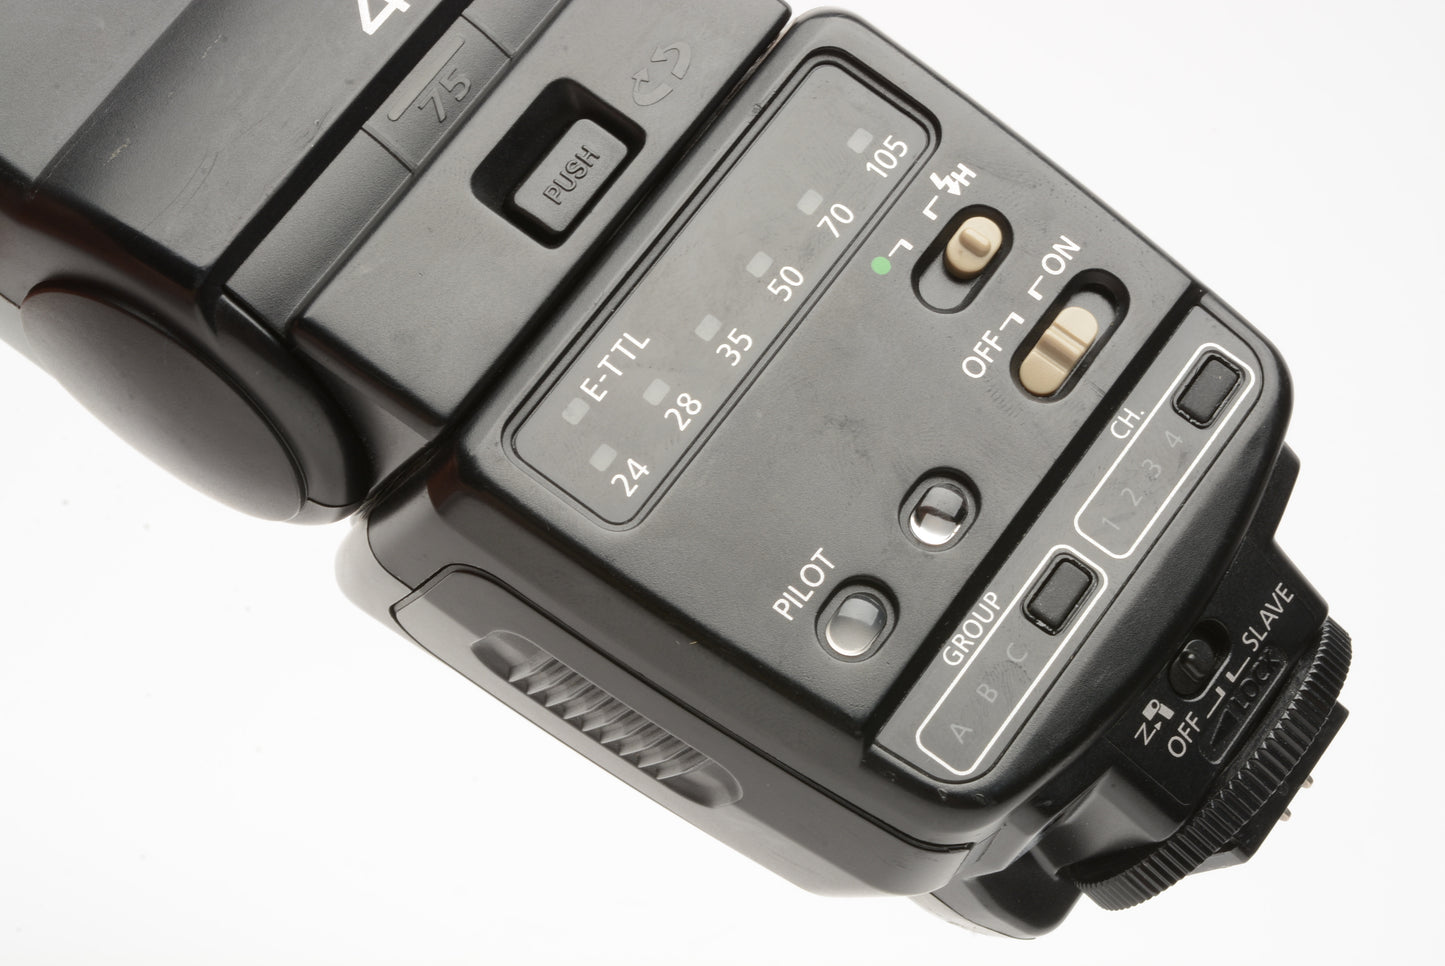 Canon 420EX Speedlite Flash, tested, works great